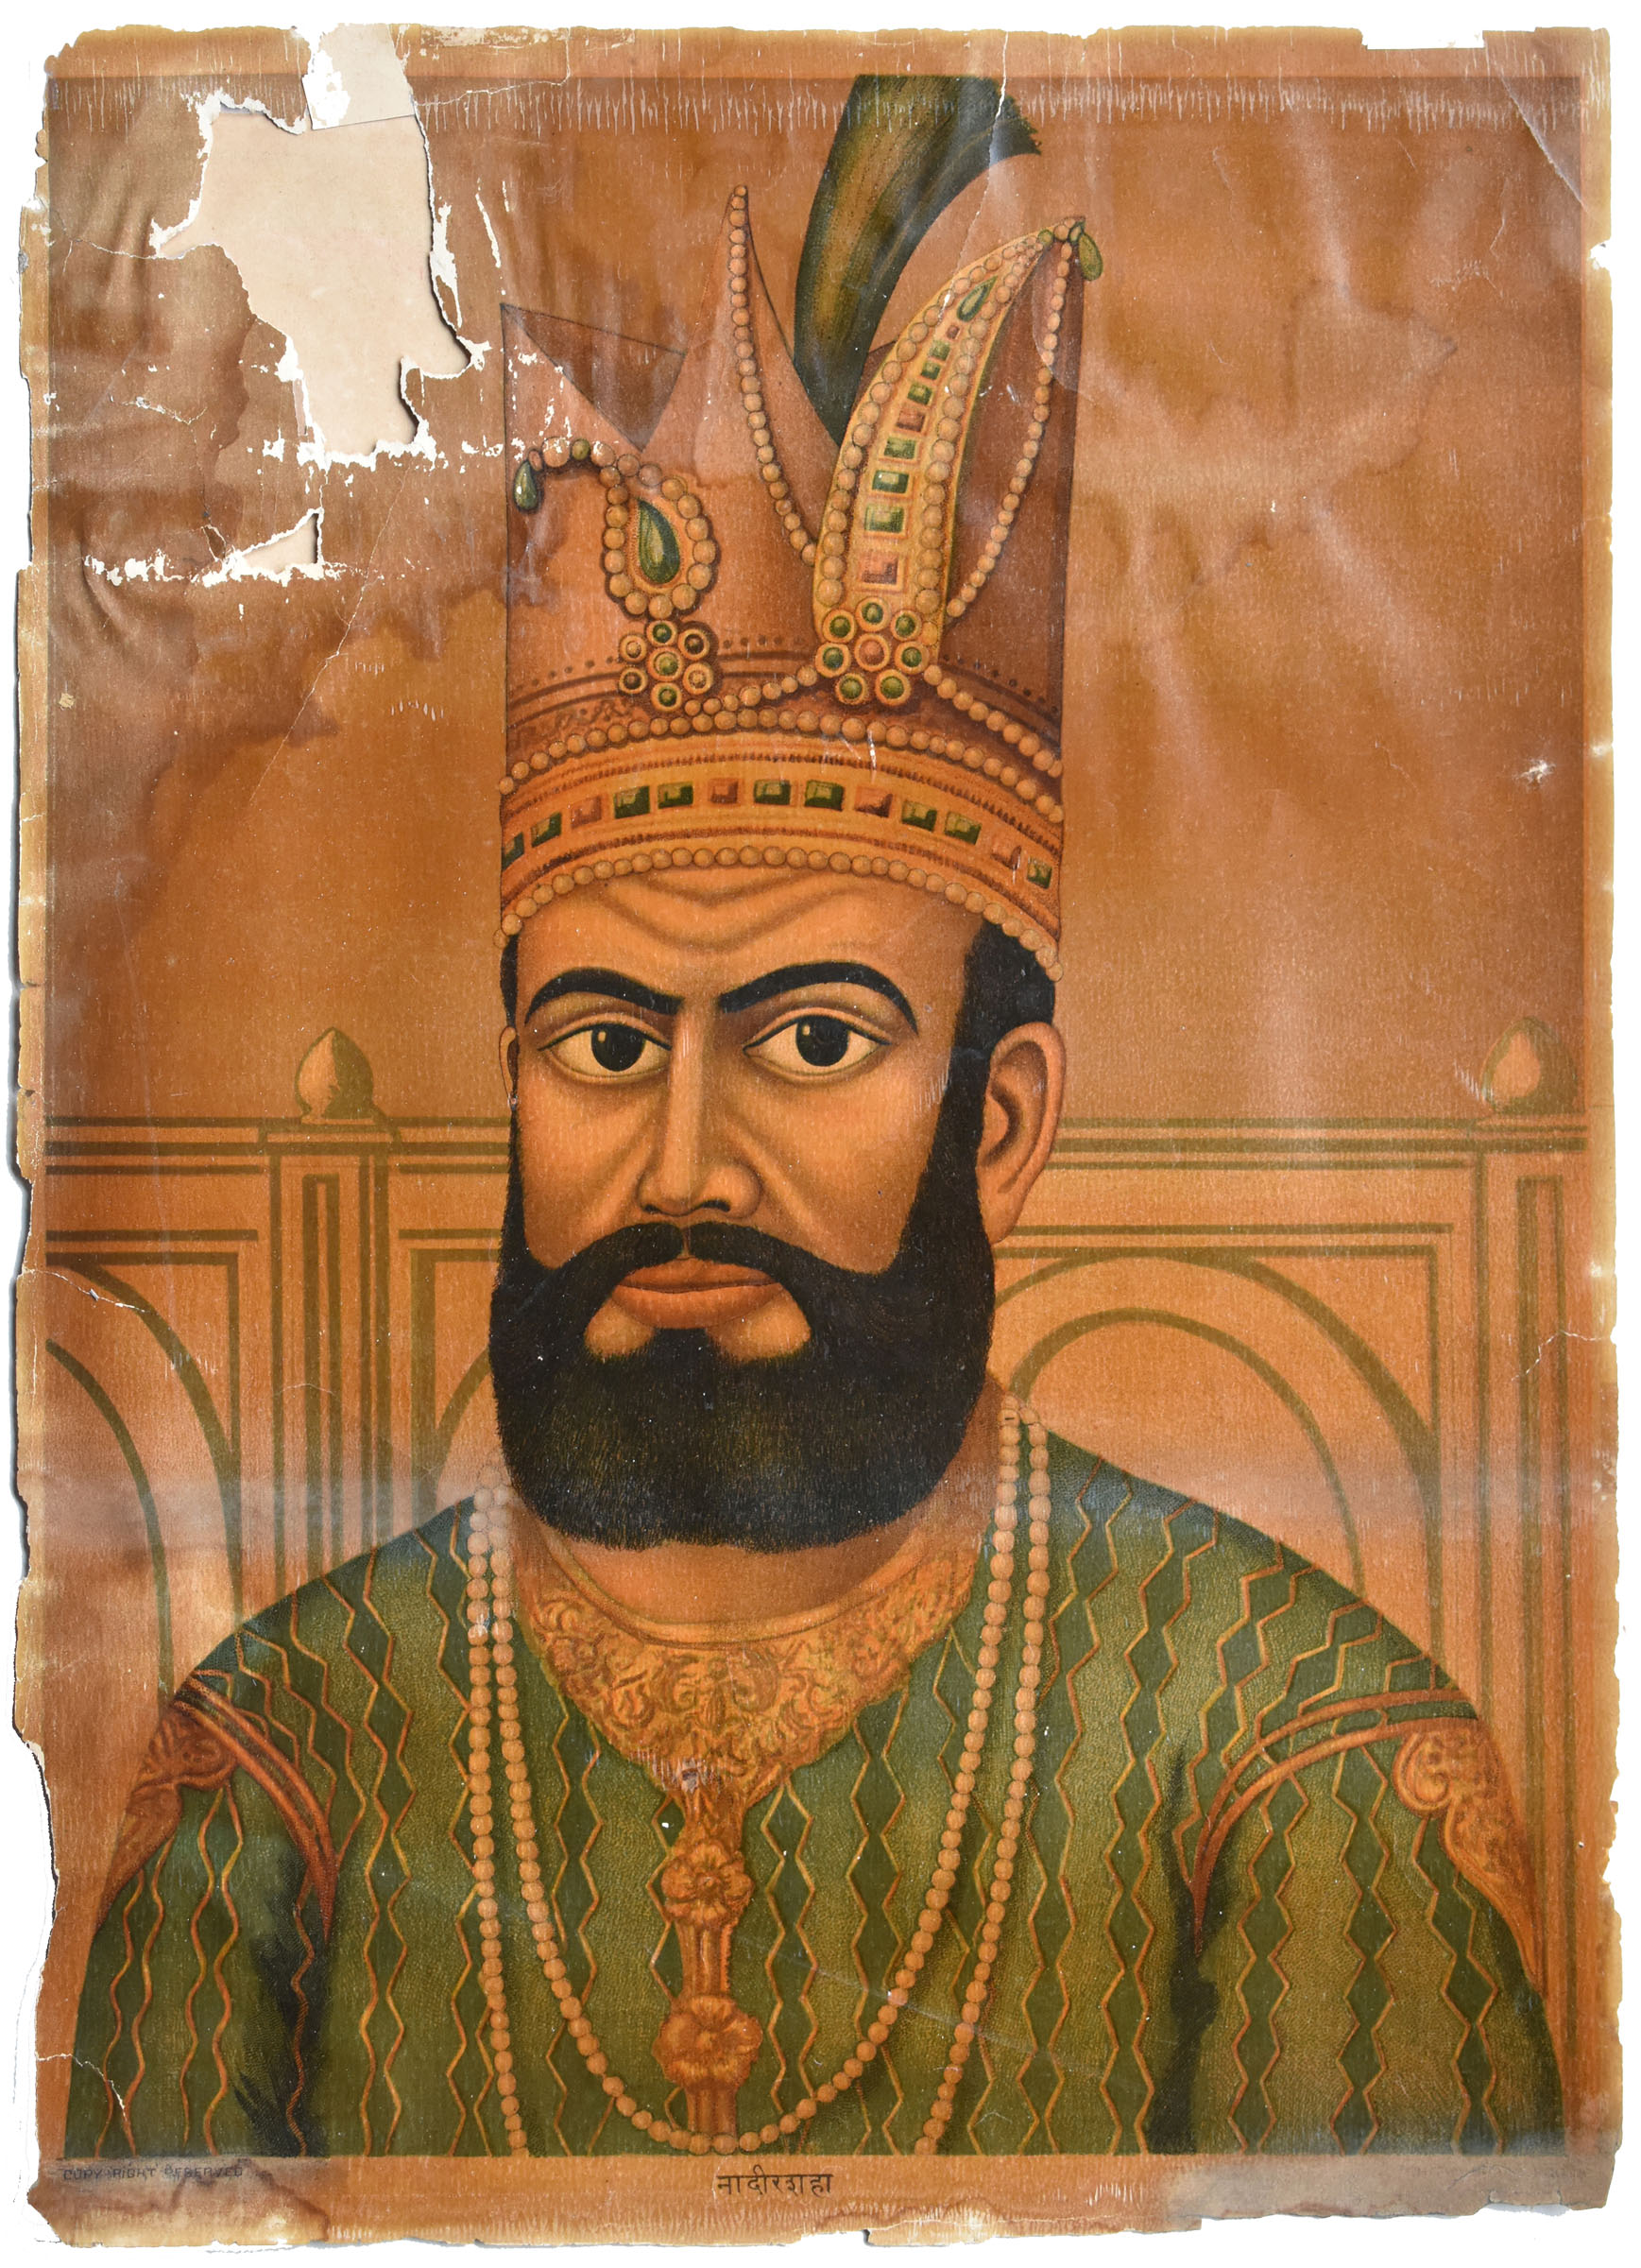 Aurangzeb (1618-1707)